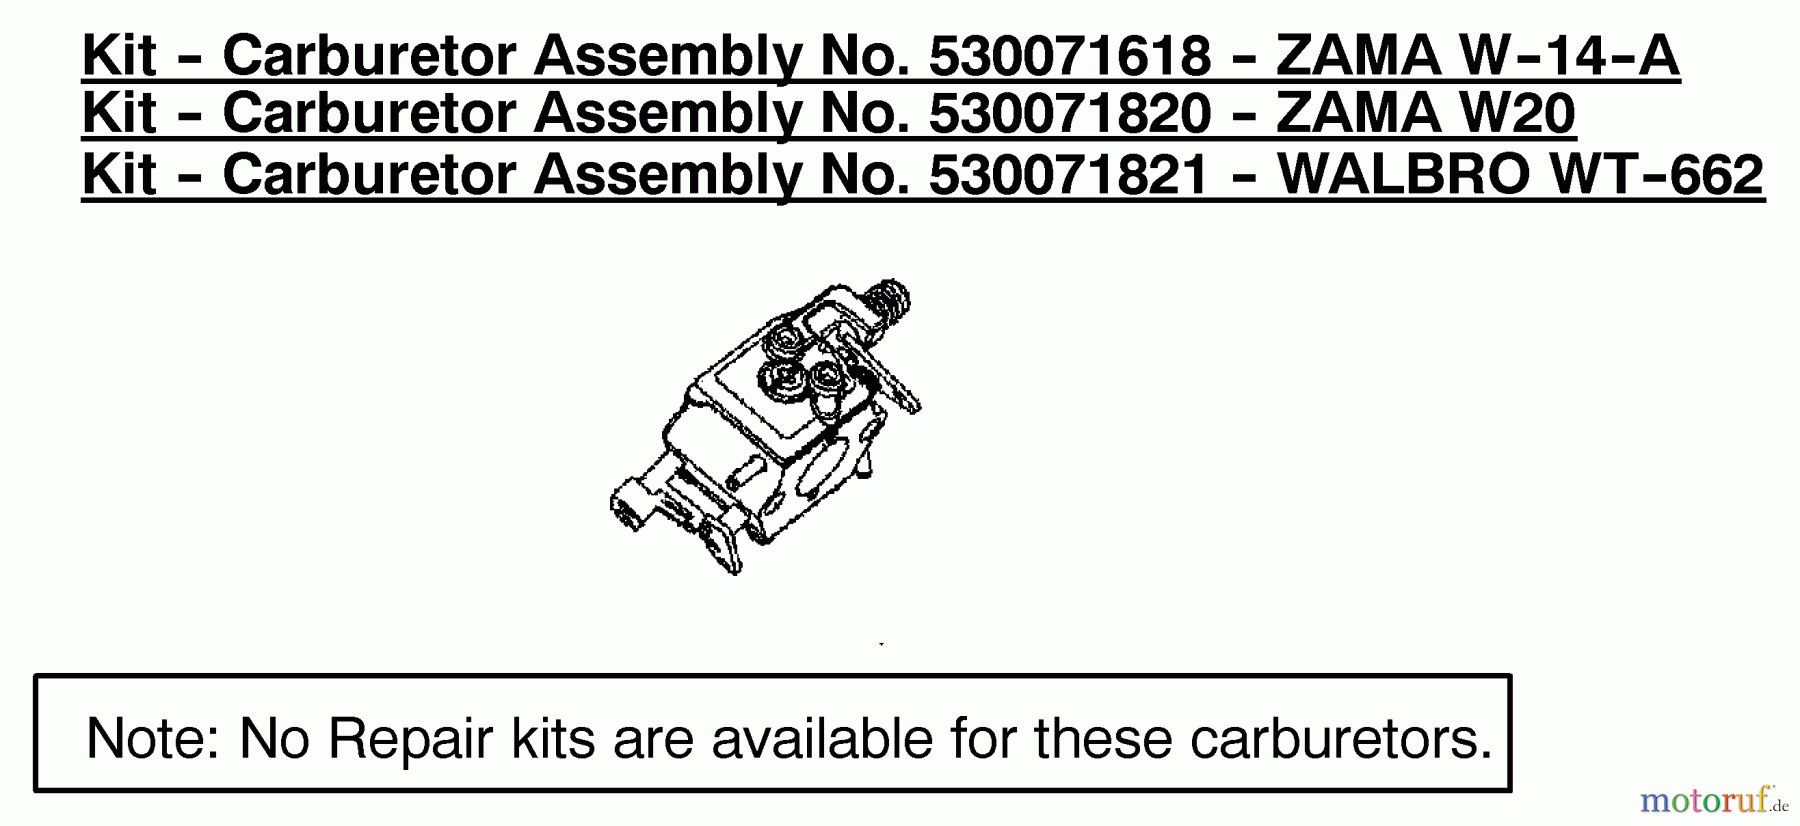  Poulan / Weed Eater Motorsägen 1975 (Type 6) - Poulan Woodshark Chainsaw Carburetor Assembly (Zama W-14-A) P/N 530071618